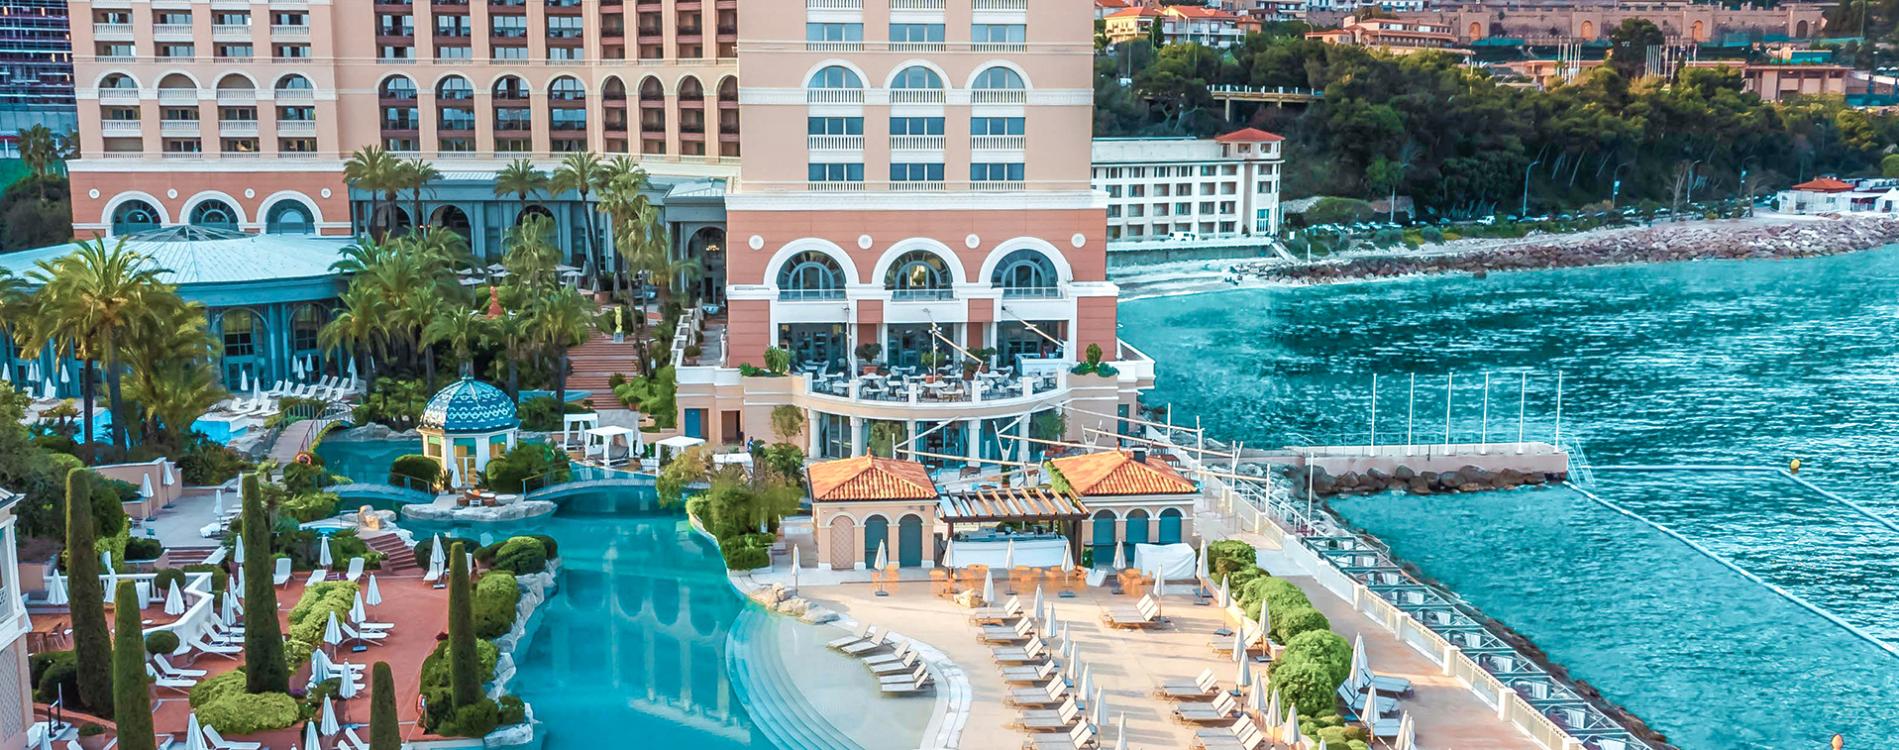 Monte-Carlo Bay Hotel & Resort, in Monte-Carlo, Monaco - Preferred Hotels &  Resorts